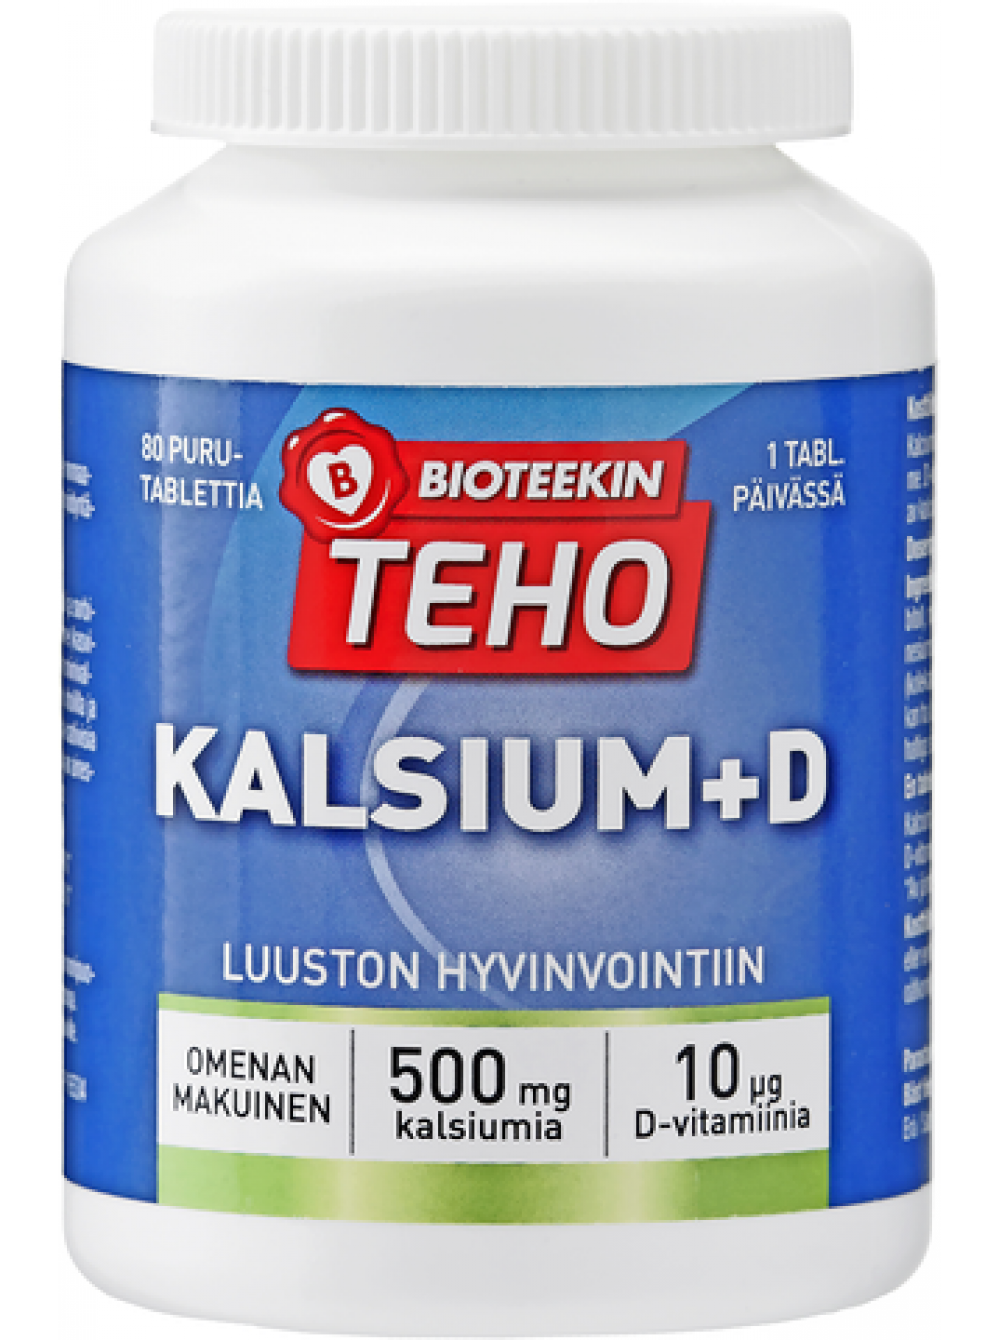 Витамины Bioteekin Teho Kalsium + D (ФИНЛЯНДИЯ, 80 таб.)